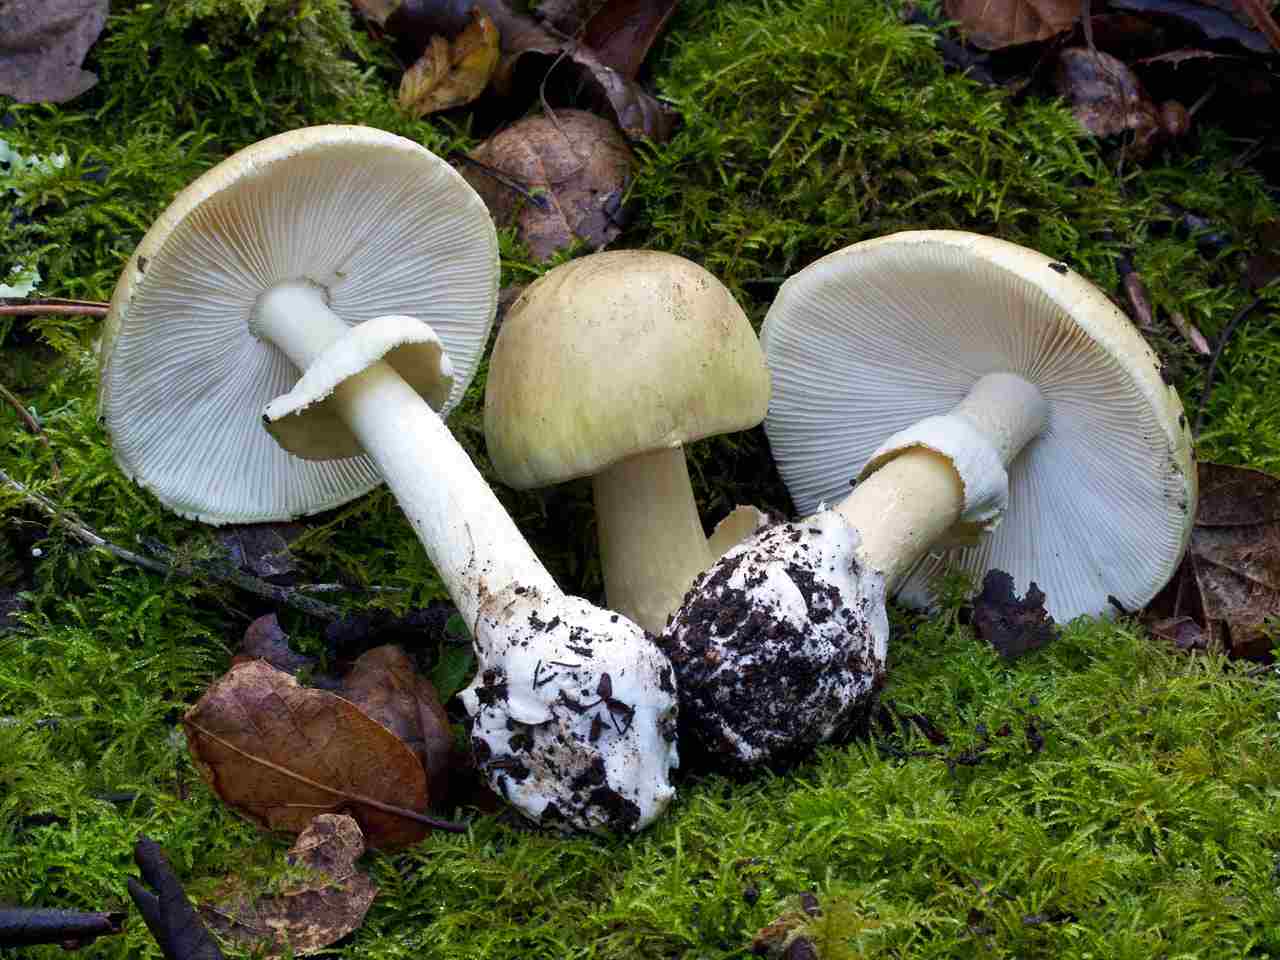 giftige Pilze grüner Knollenblätterpilz erkennen und vermeiden lernen